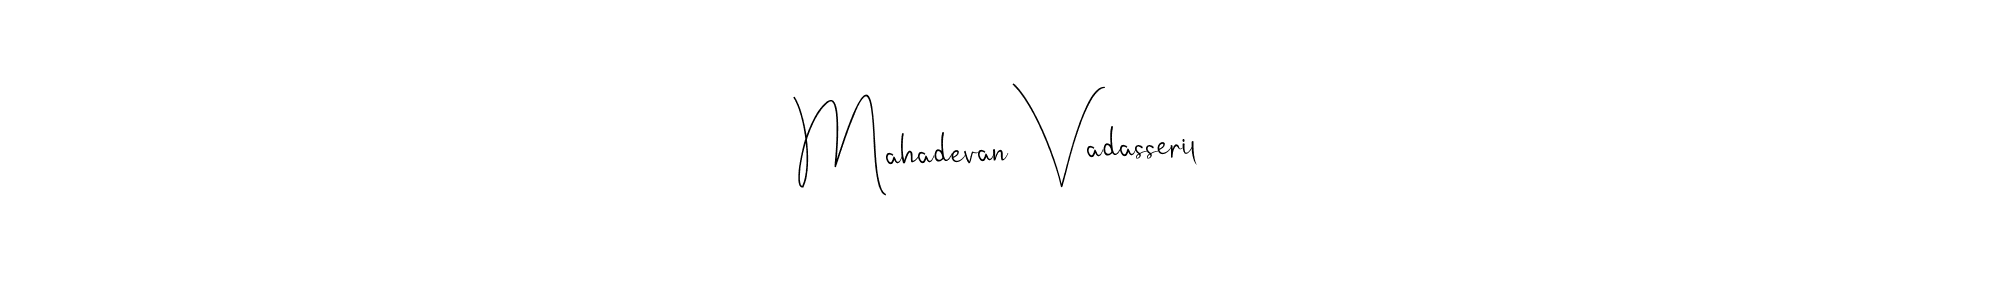 How to Draw Mahadevan Vadasseril signature style? Andilay-7BmLP is a latest design signature styles for name Mahadevan Vadasseril. Mahadevan Vadasseril signature style 4 images and pictures png